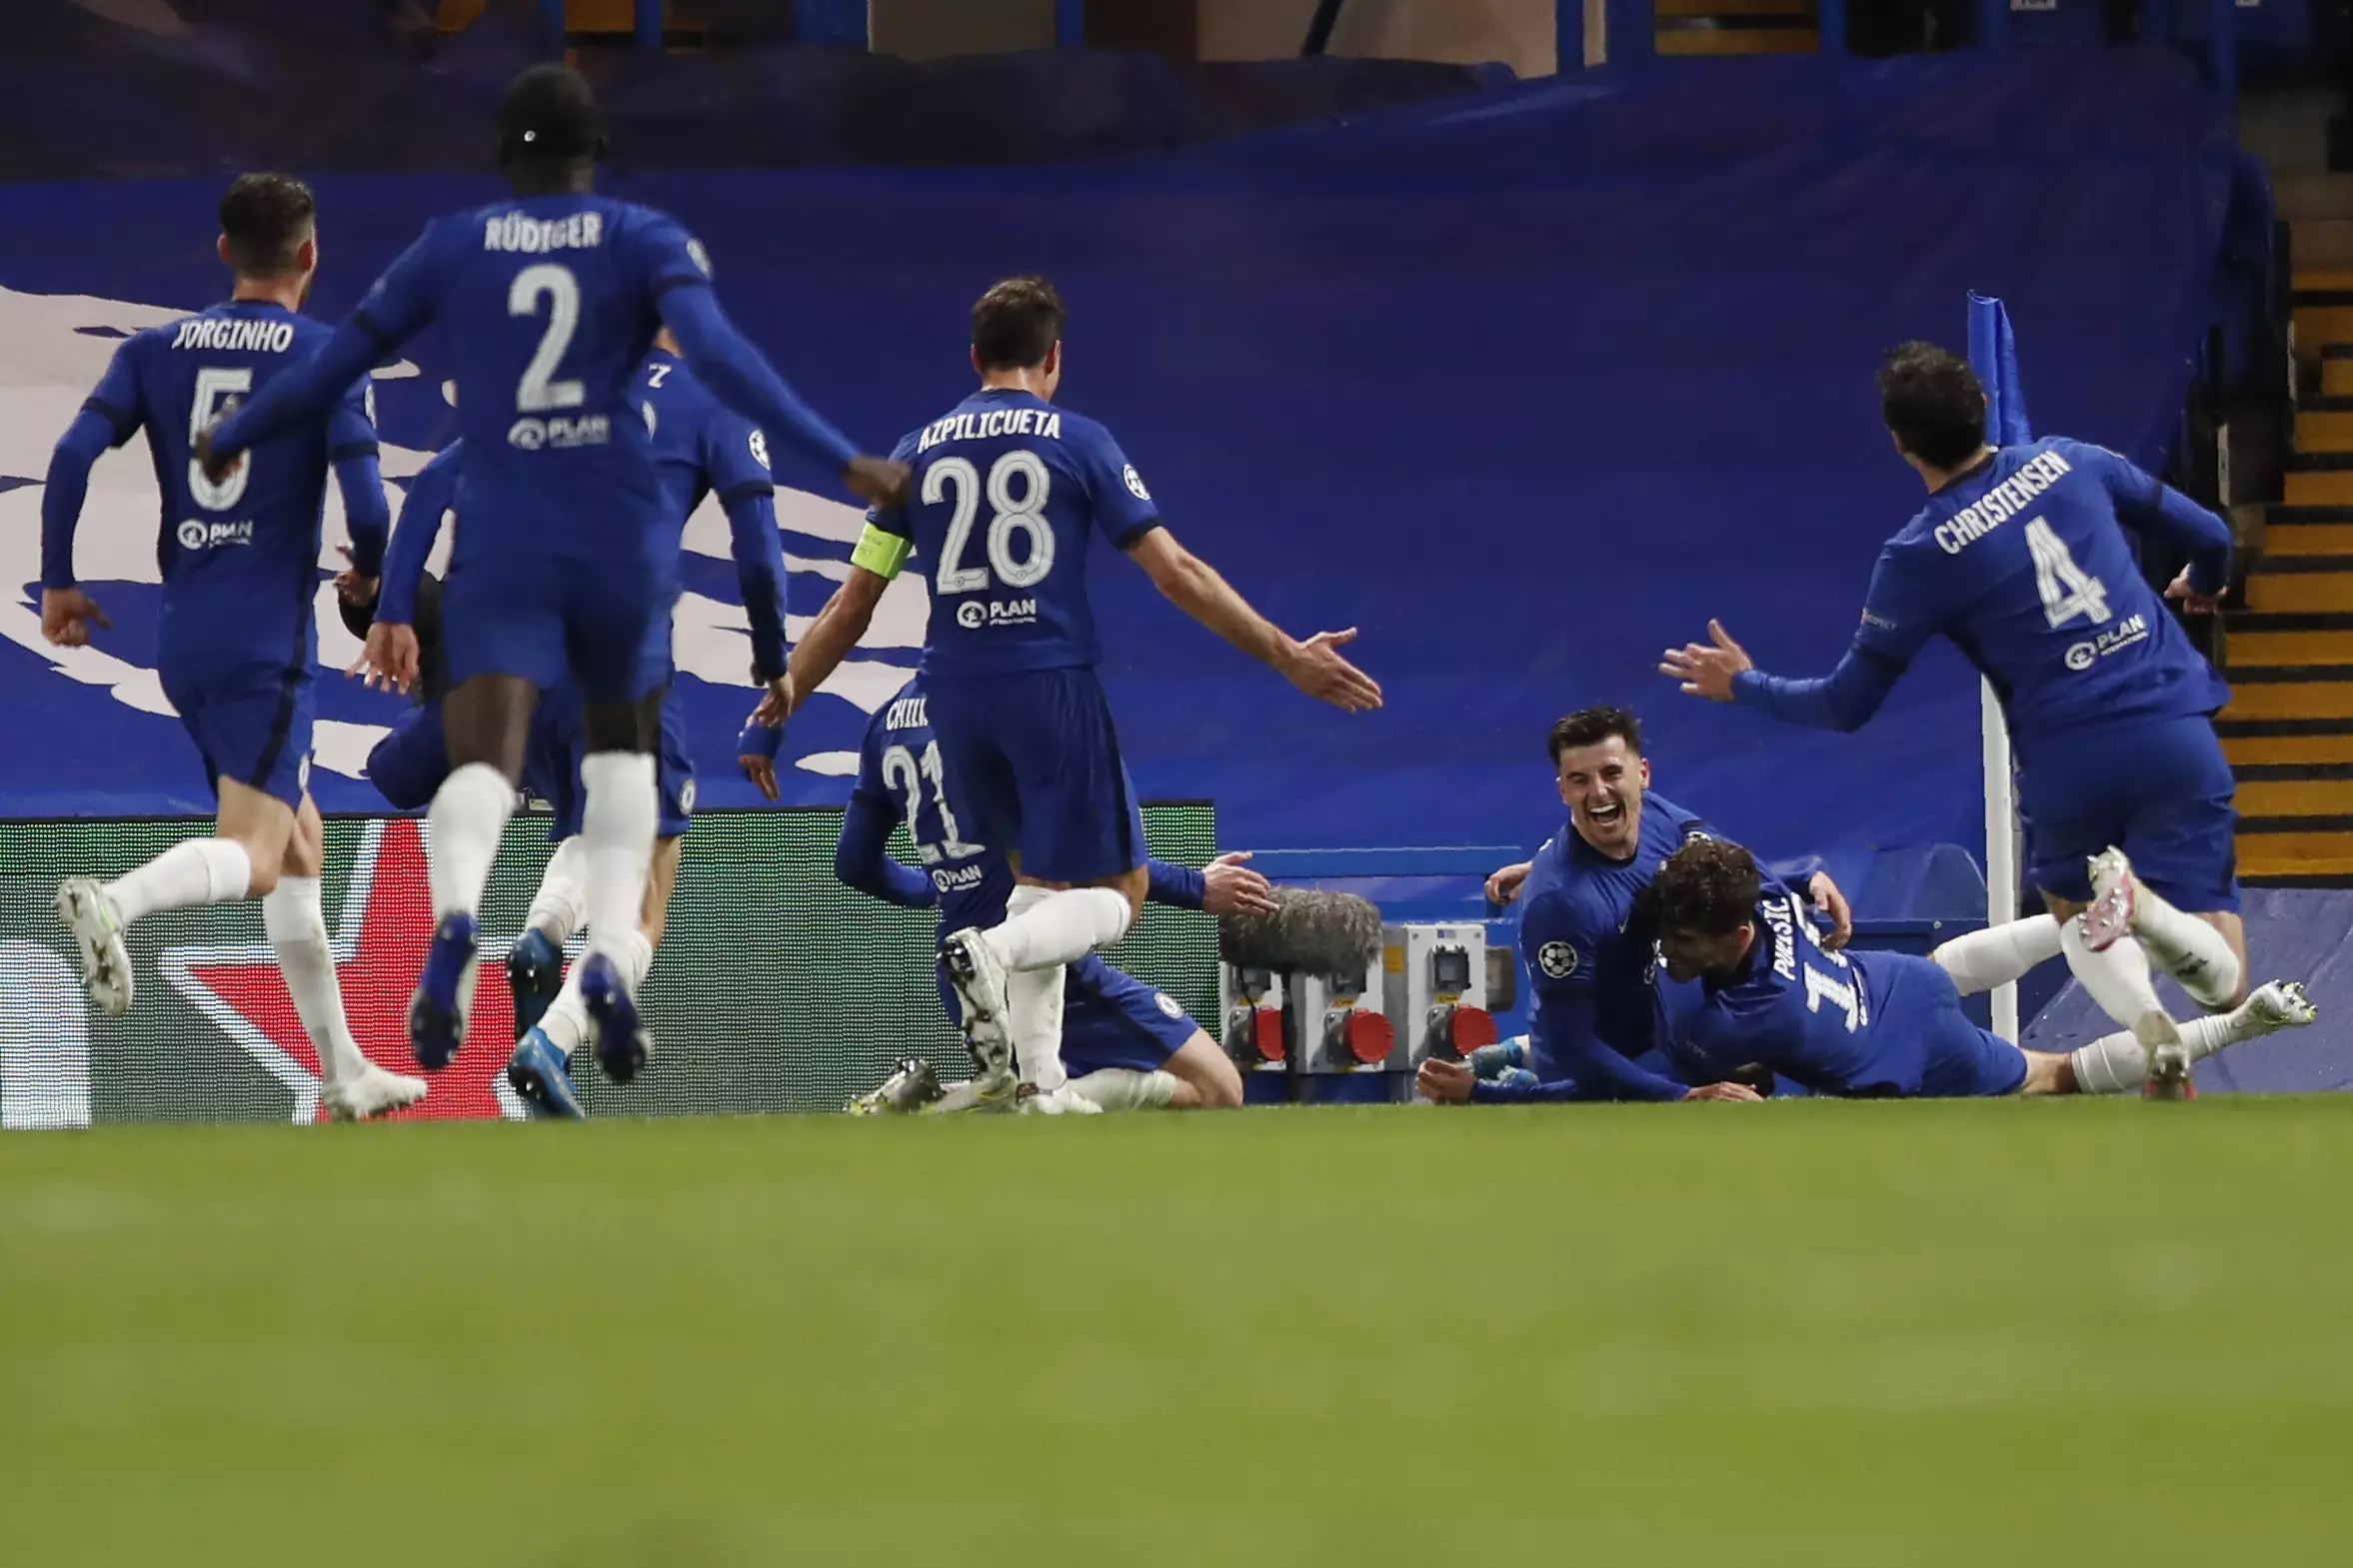 Chelsea players celebrate Mason Mount's goal vs Real. Image: PA Images